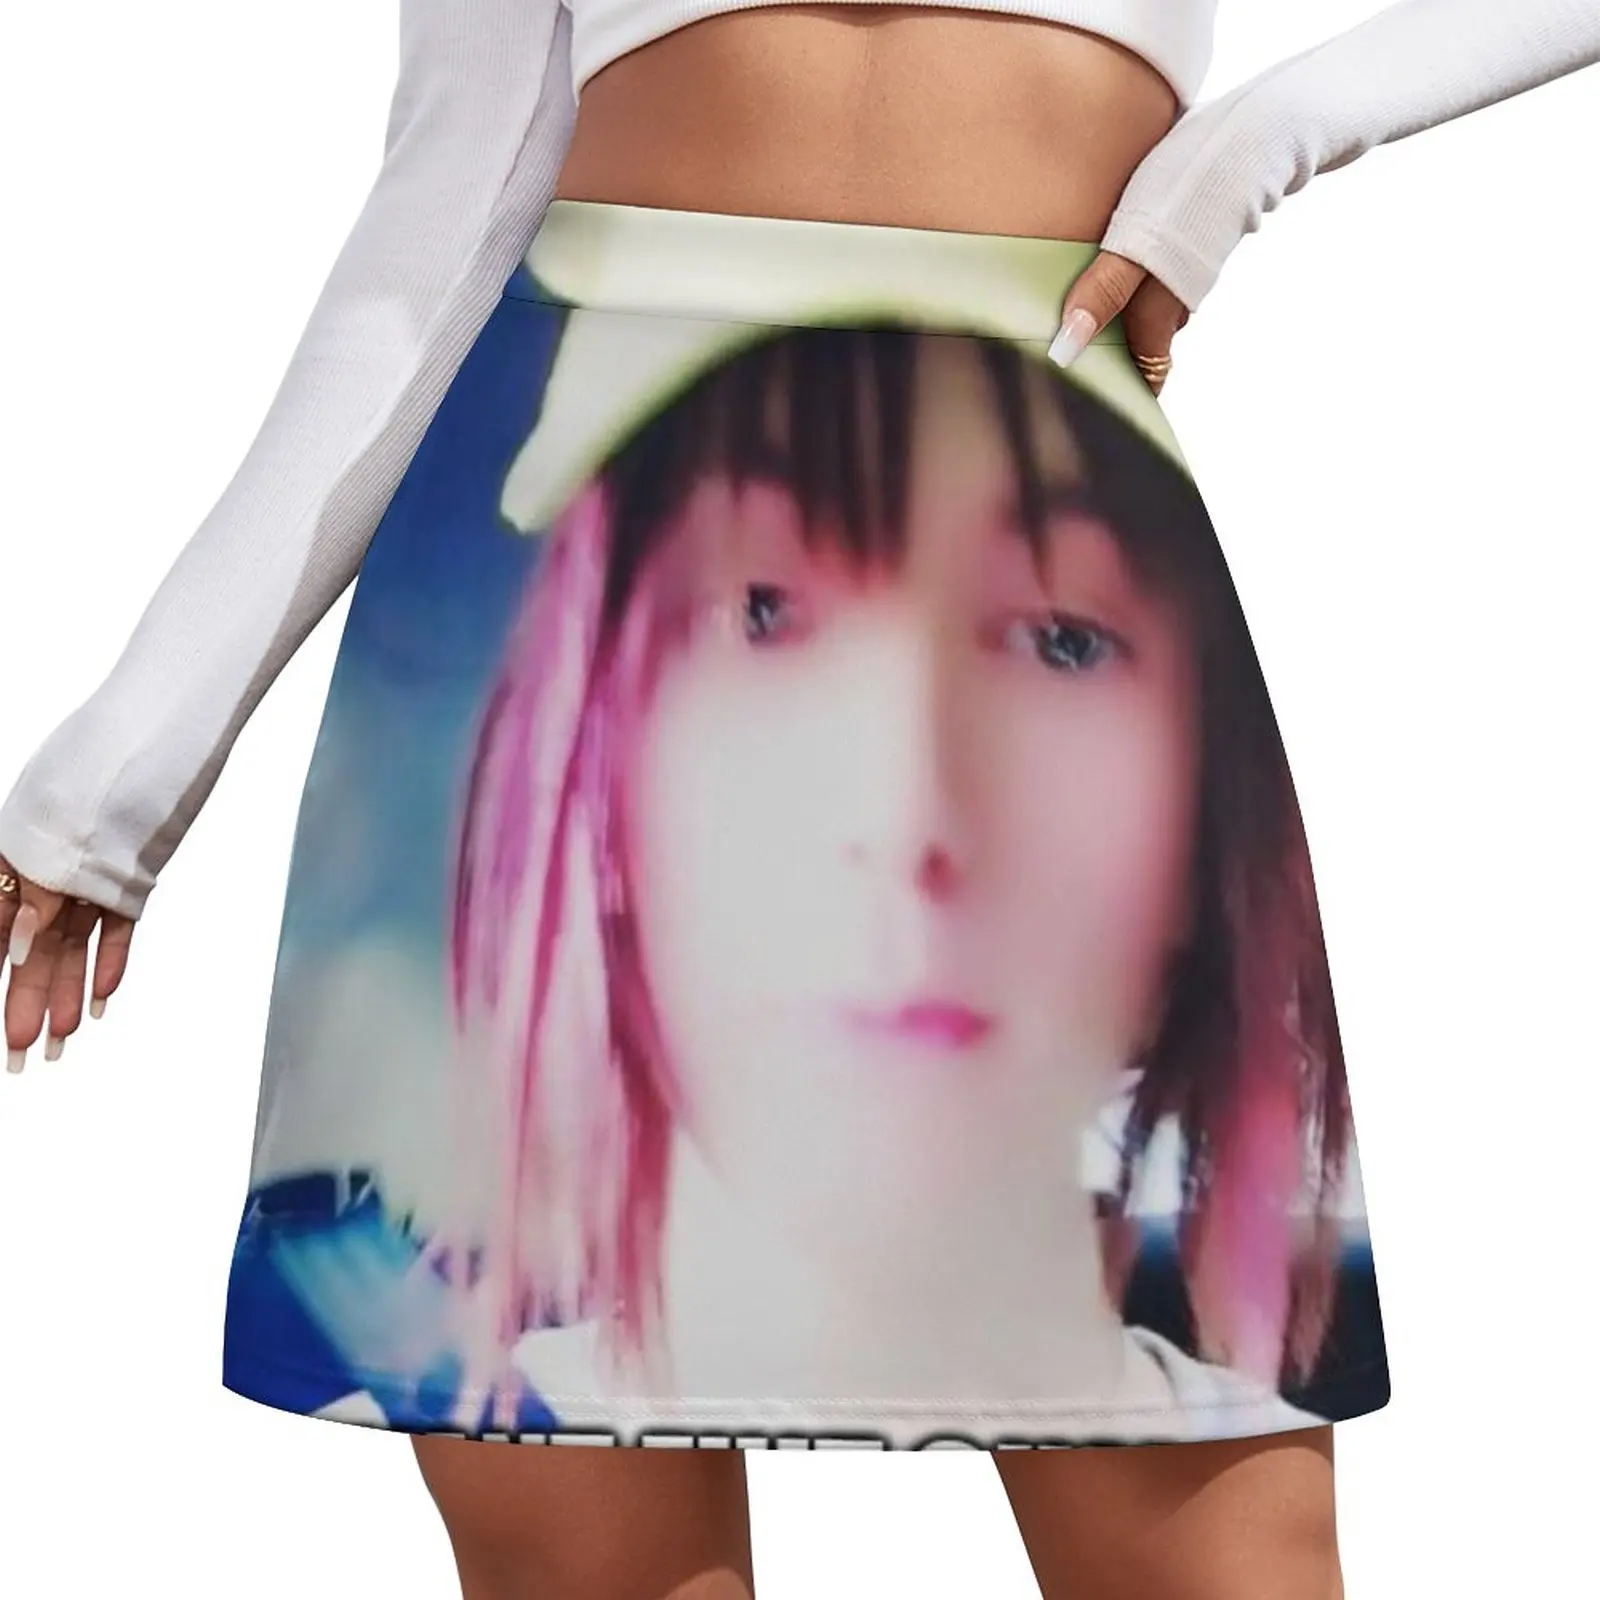 Drain Gang Bladee I want Fuit Gummy Meme Shirt Mini Skirt skirts for women 2023 women's clothing korea stylish 12v 1 4 gang toggle switch panel mini rocker switch on off spst blue led for rv boat yacht marine